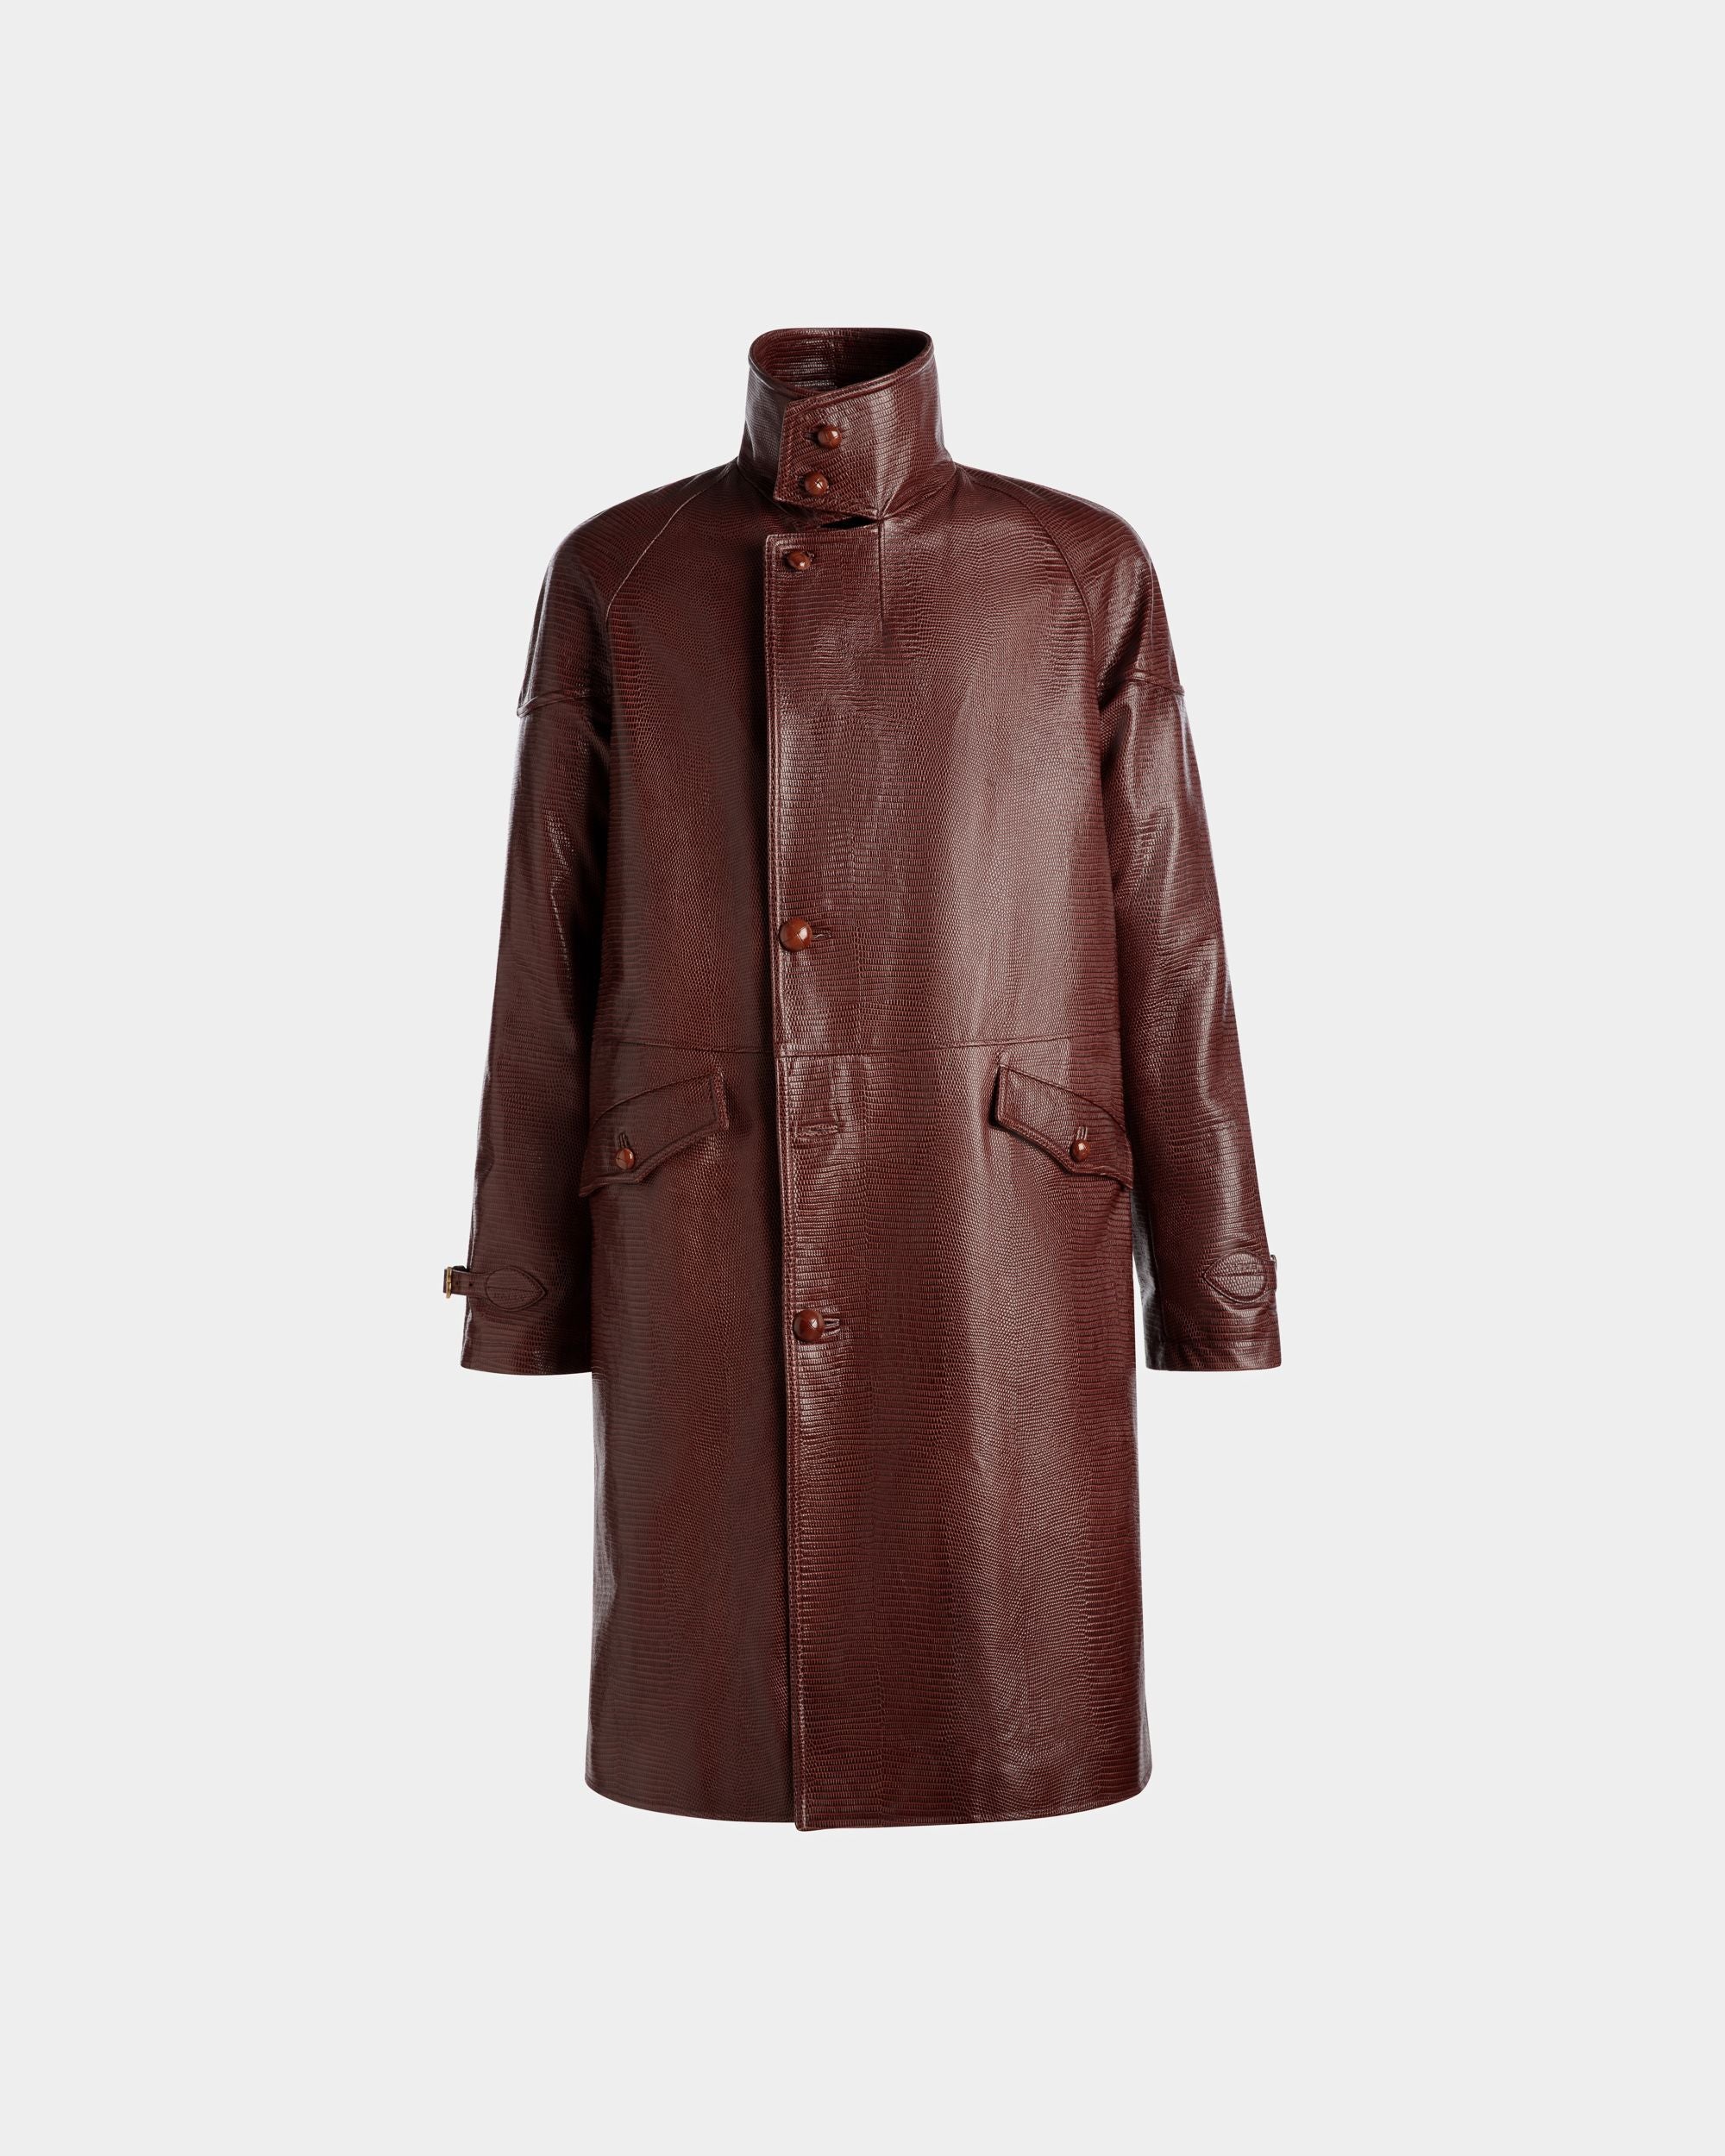 Pea Coat | Men's Coat | Burgundy Leather | Bally | Still Life Front